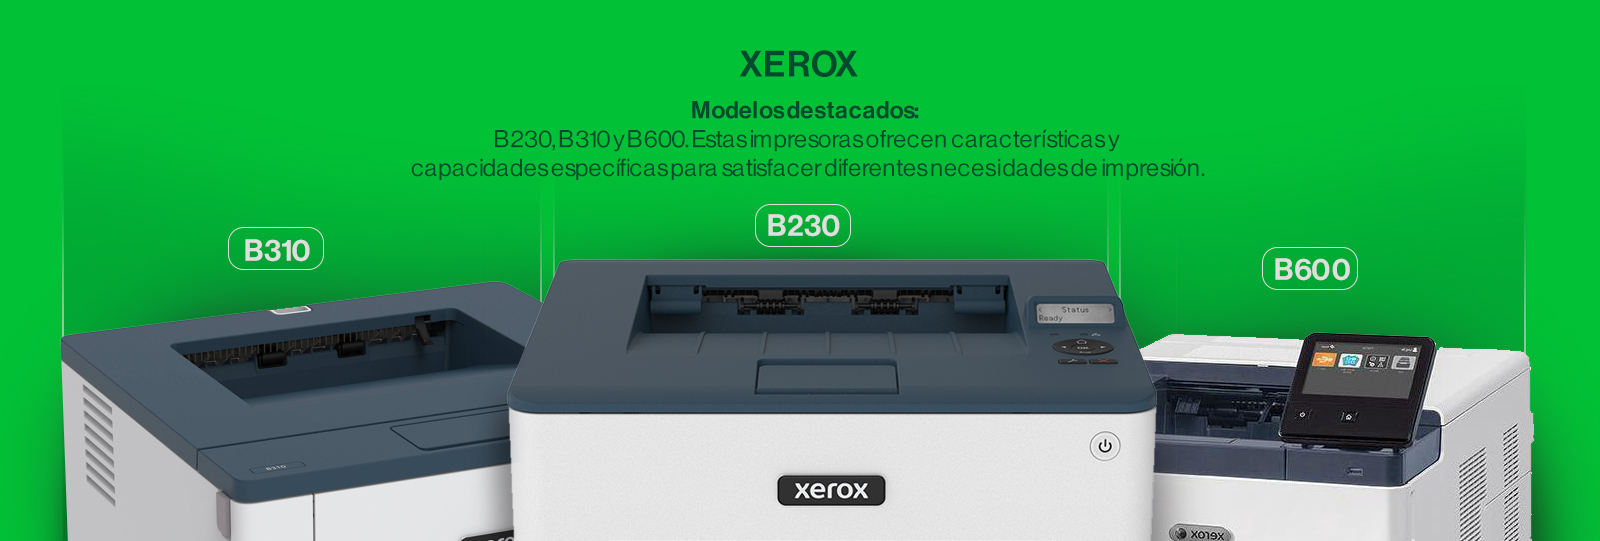 Xerox bs